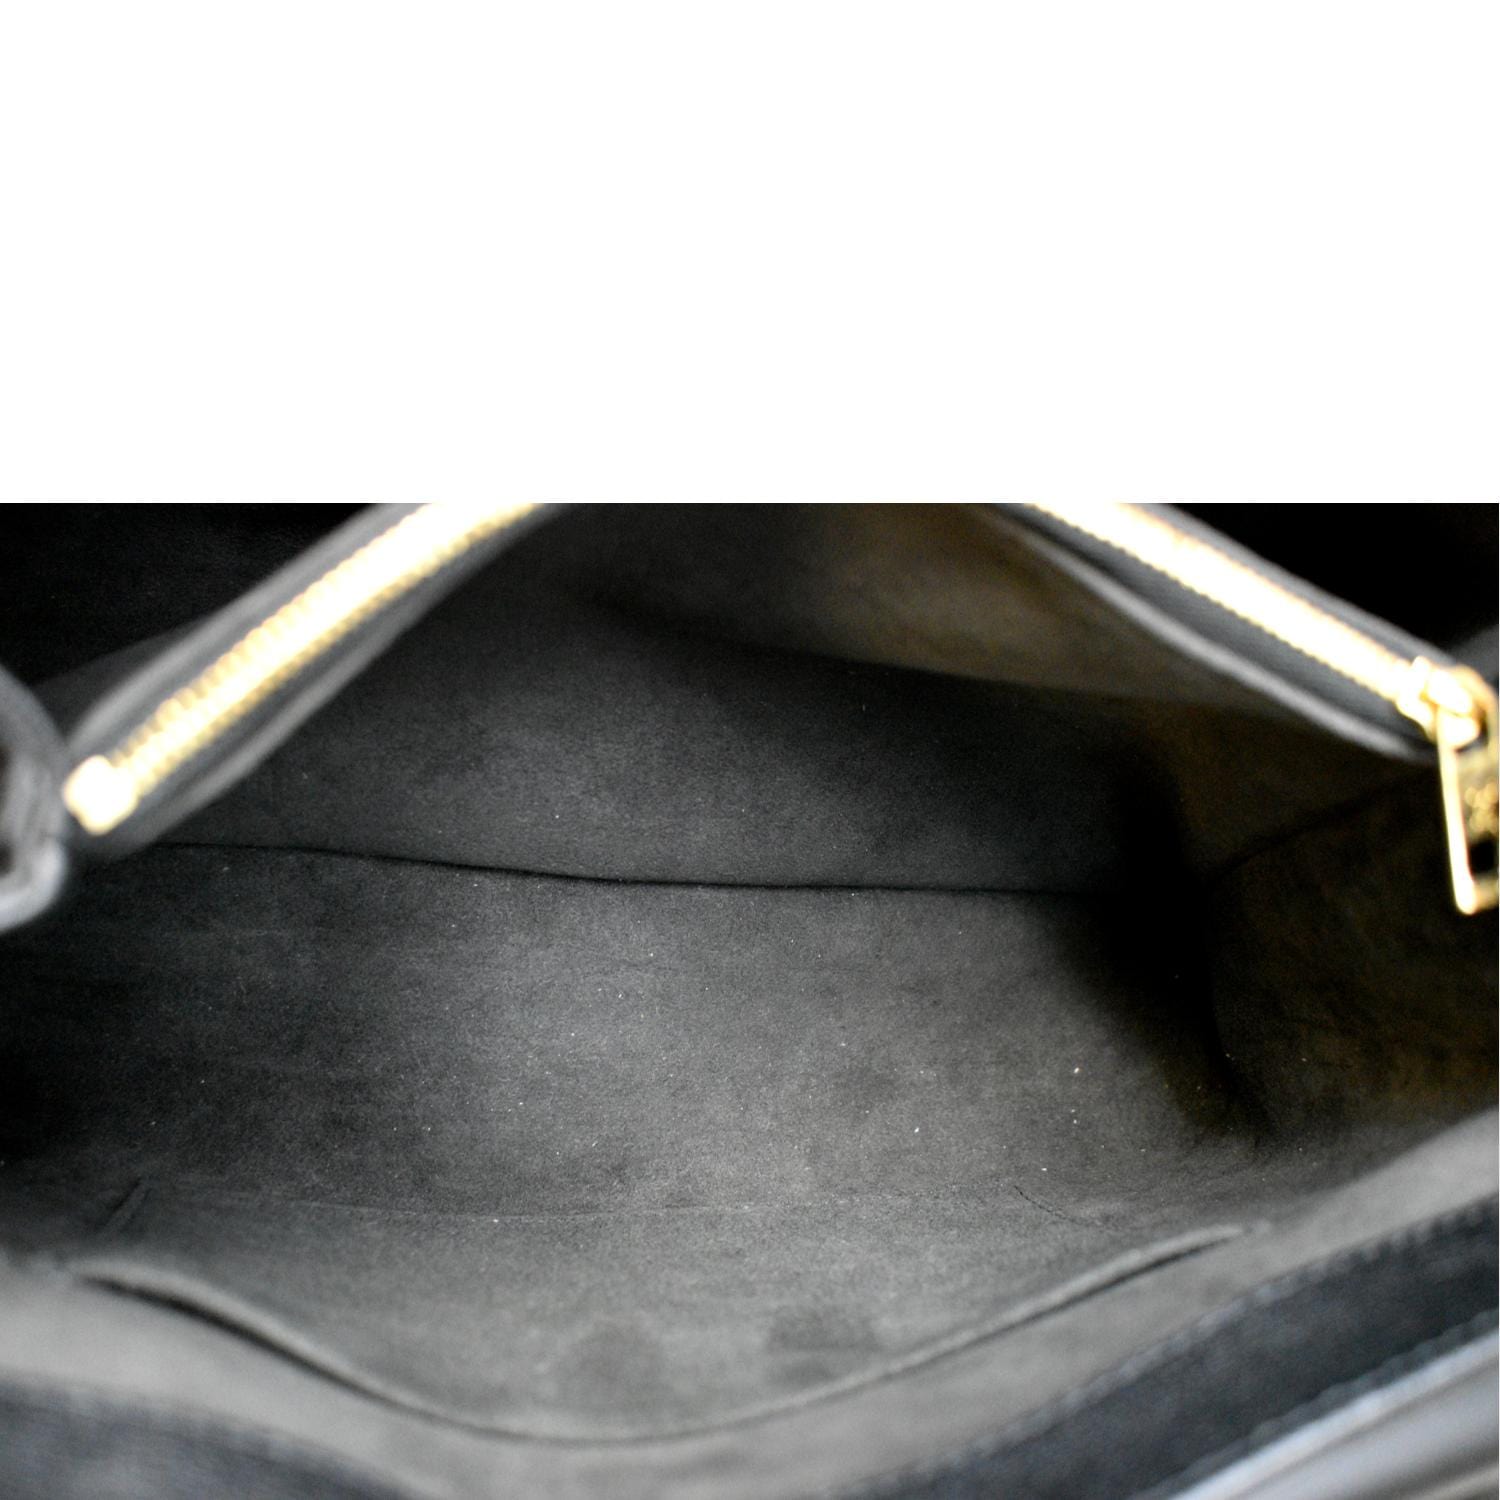 Louis Vuitton Monogram Leather One Handle Bag